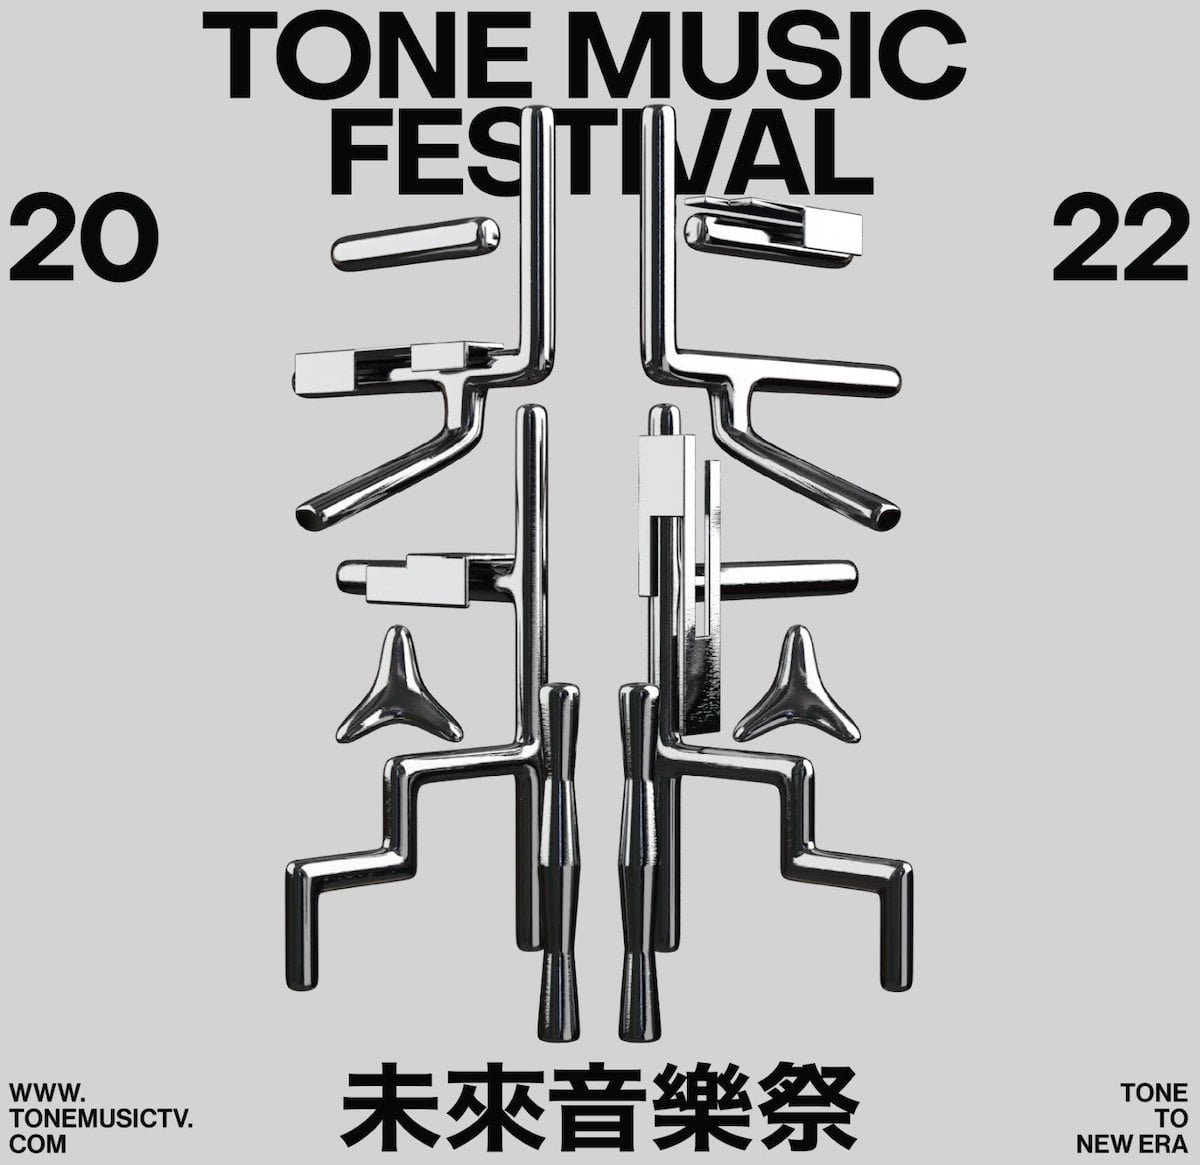 Tone Music Festival